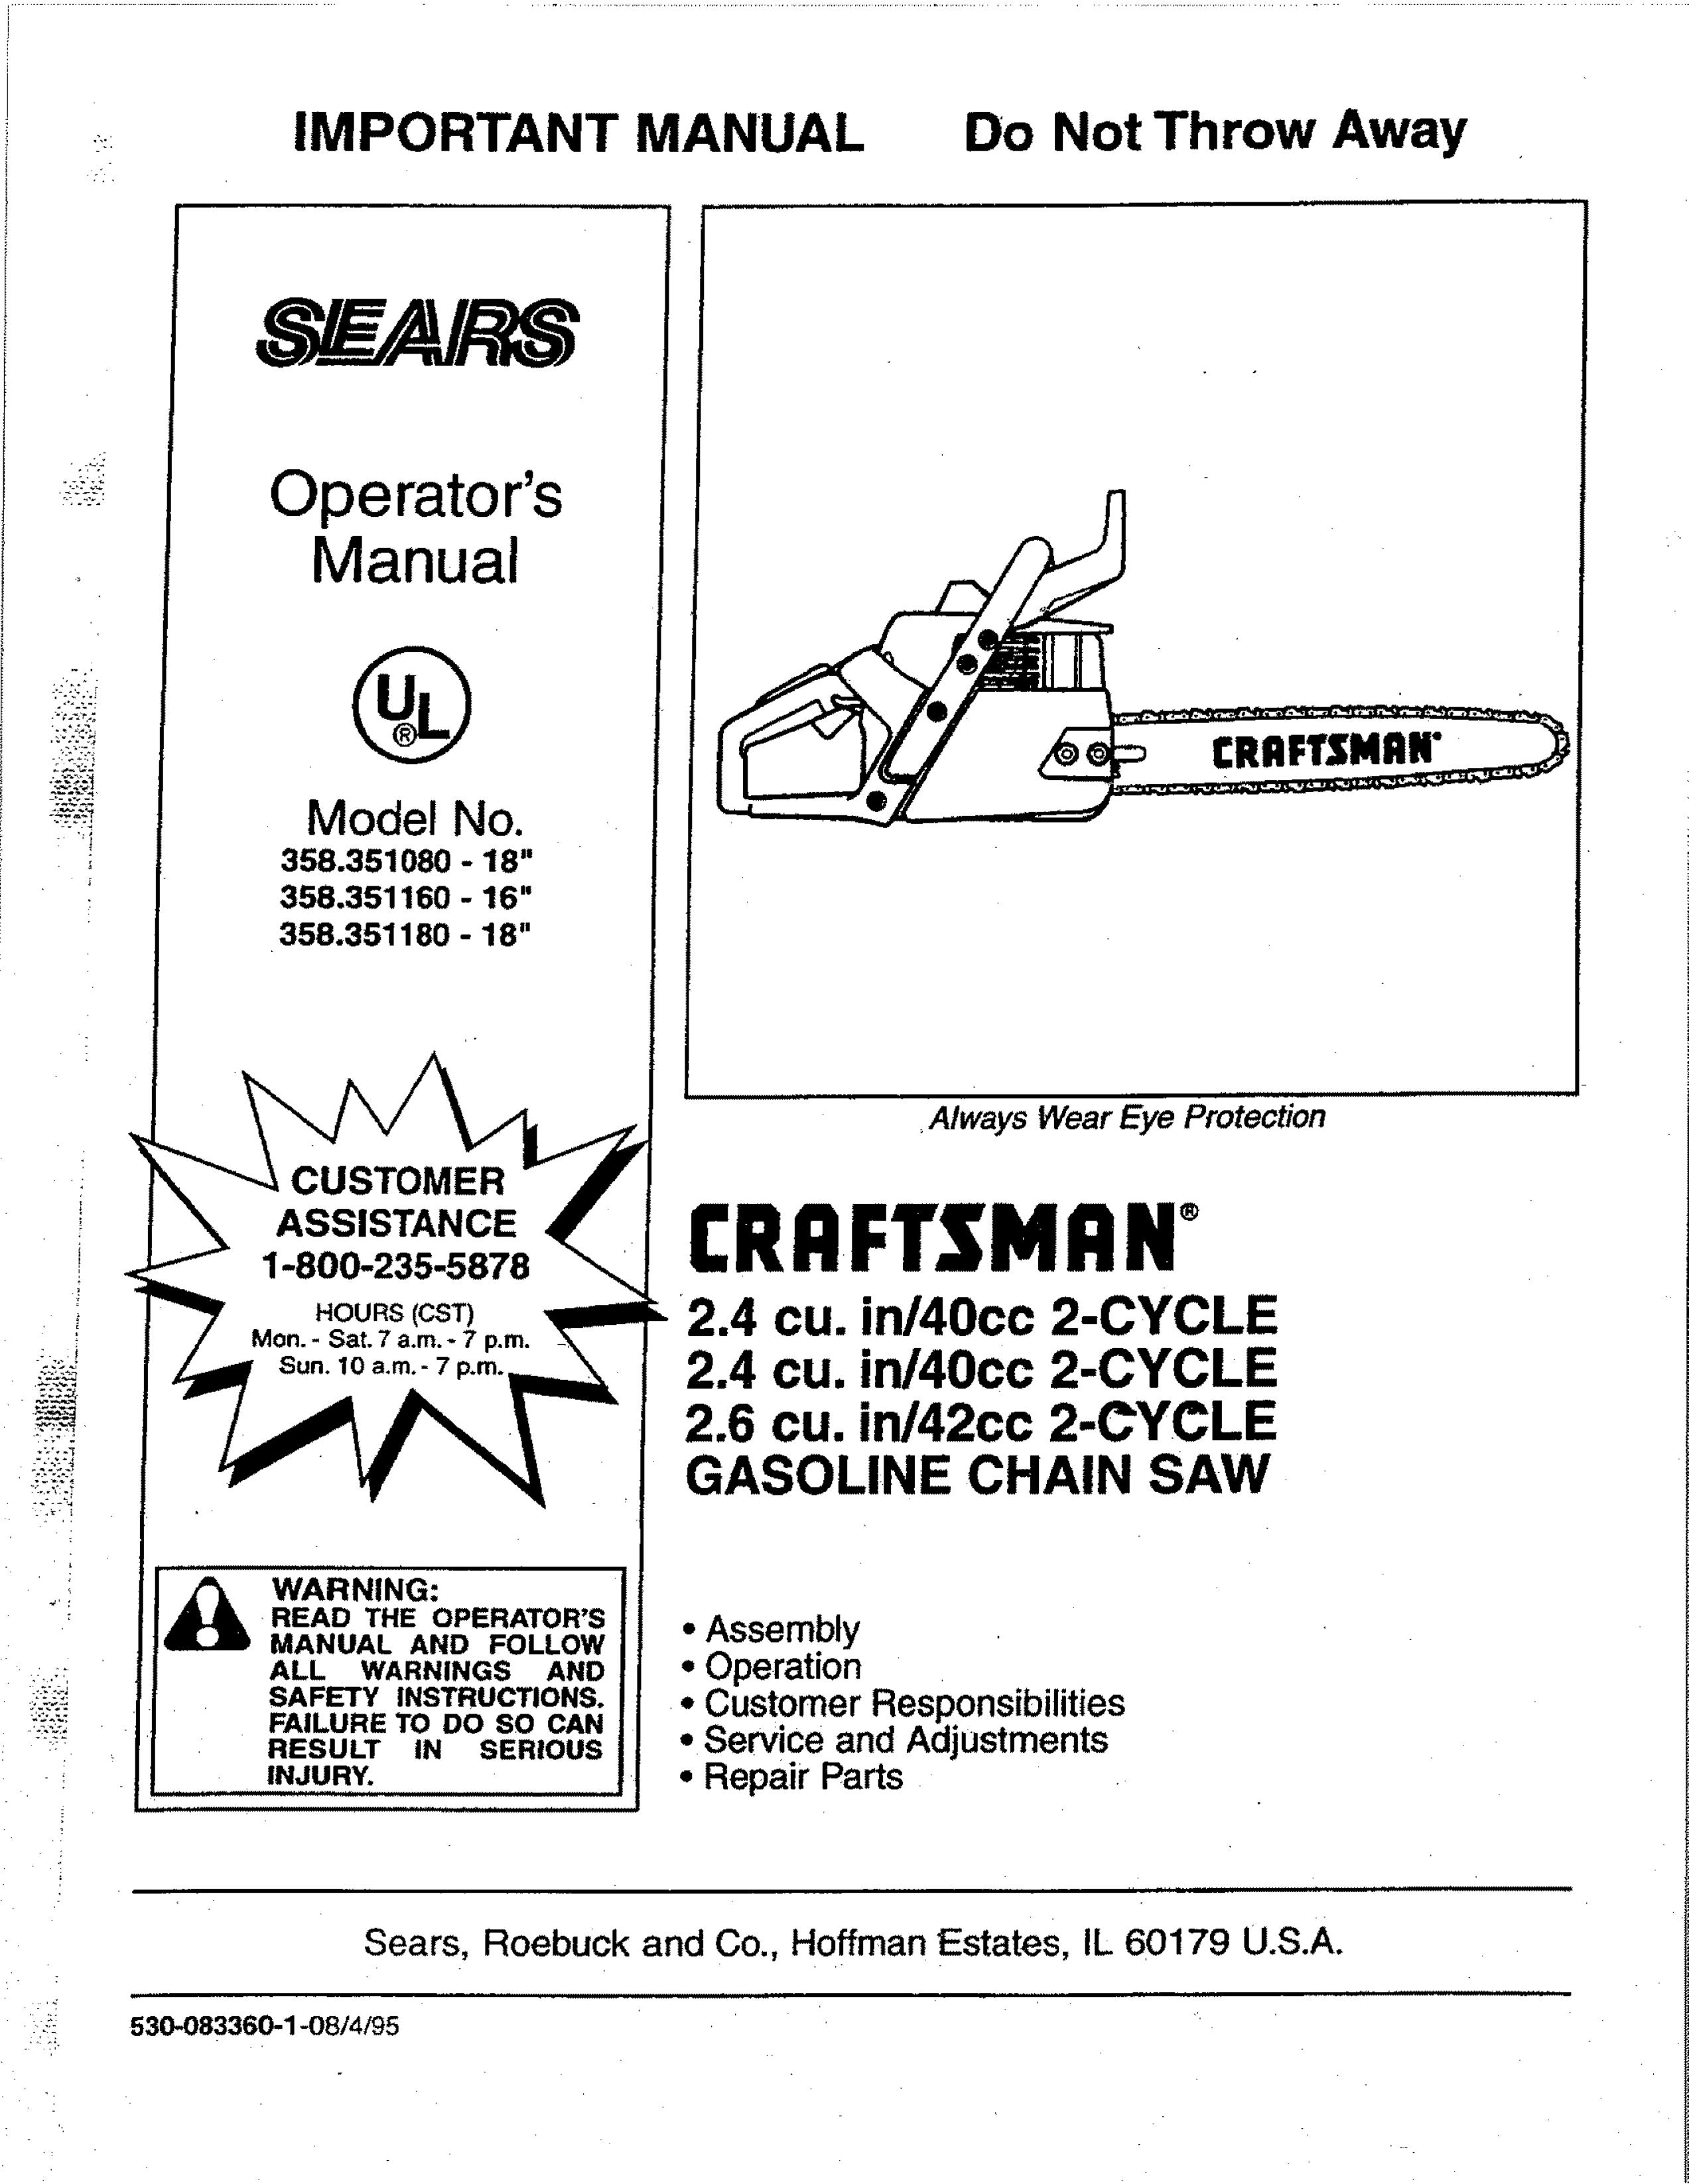 Sears 358.351080-18" Chainsaw User Manual